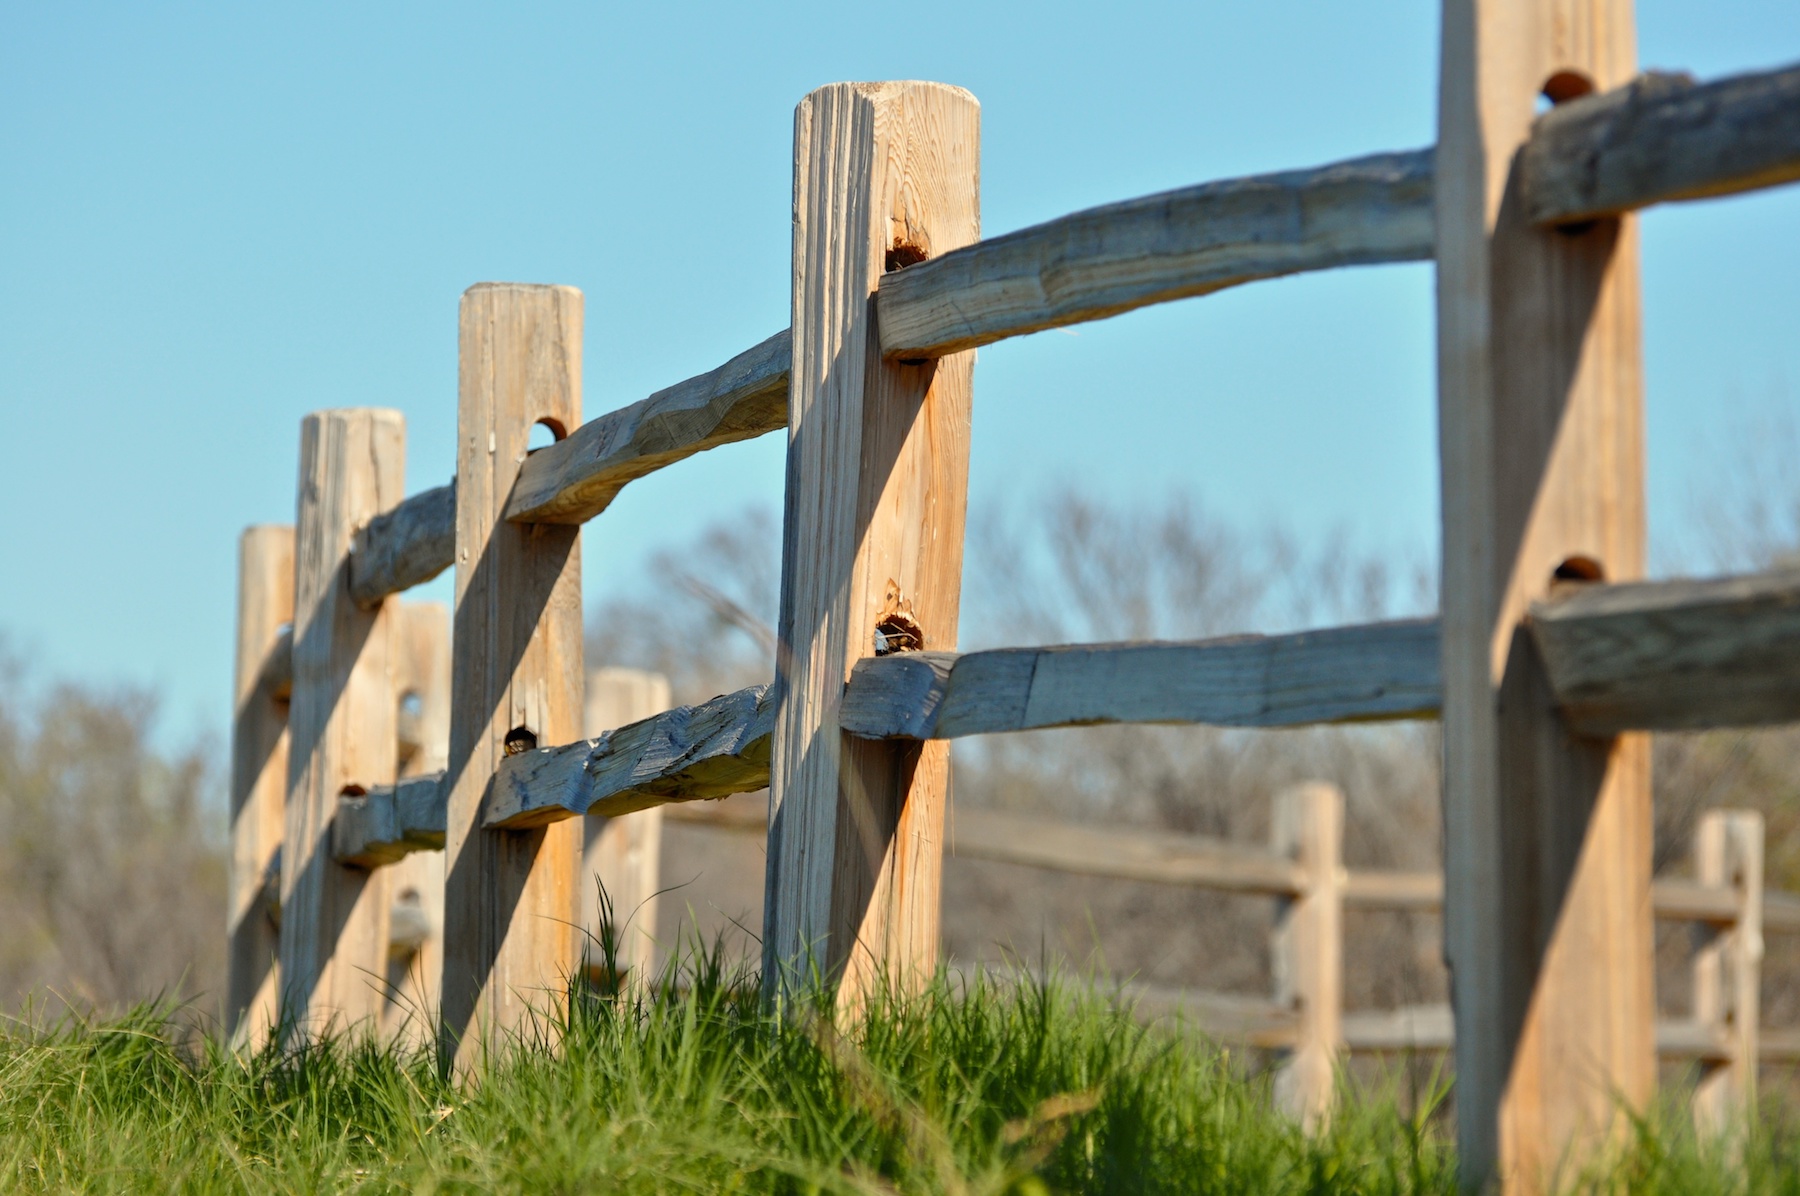 split rail fencing installation kelowna fencing company fences quality chain link fences